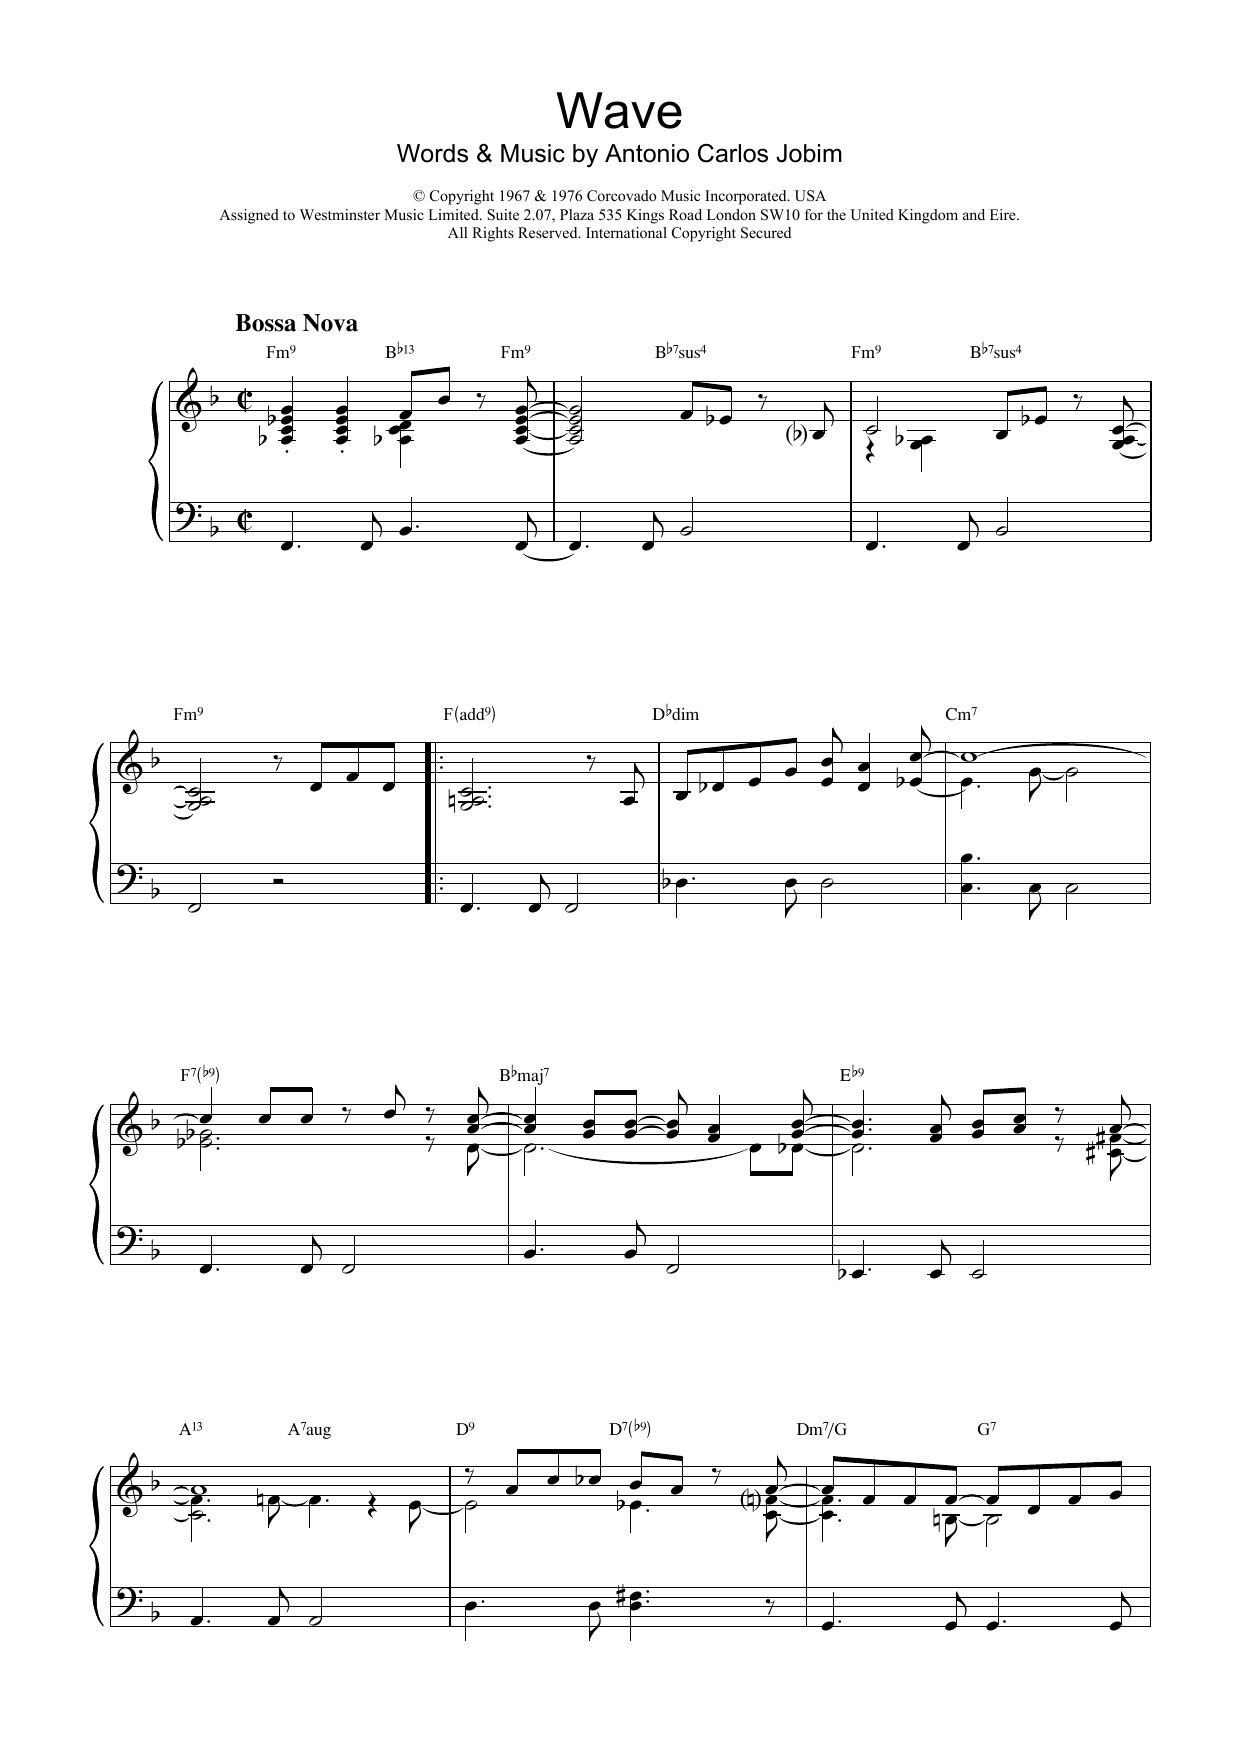 Antonio Carlos Jobim Wave Sheet Music Notes & Chords for Ukulele - Download or Print PDF